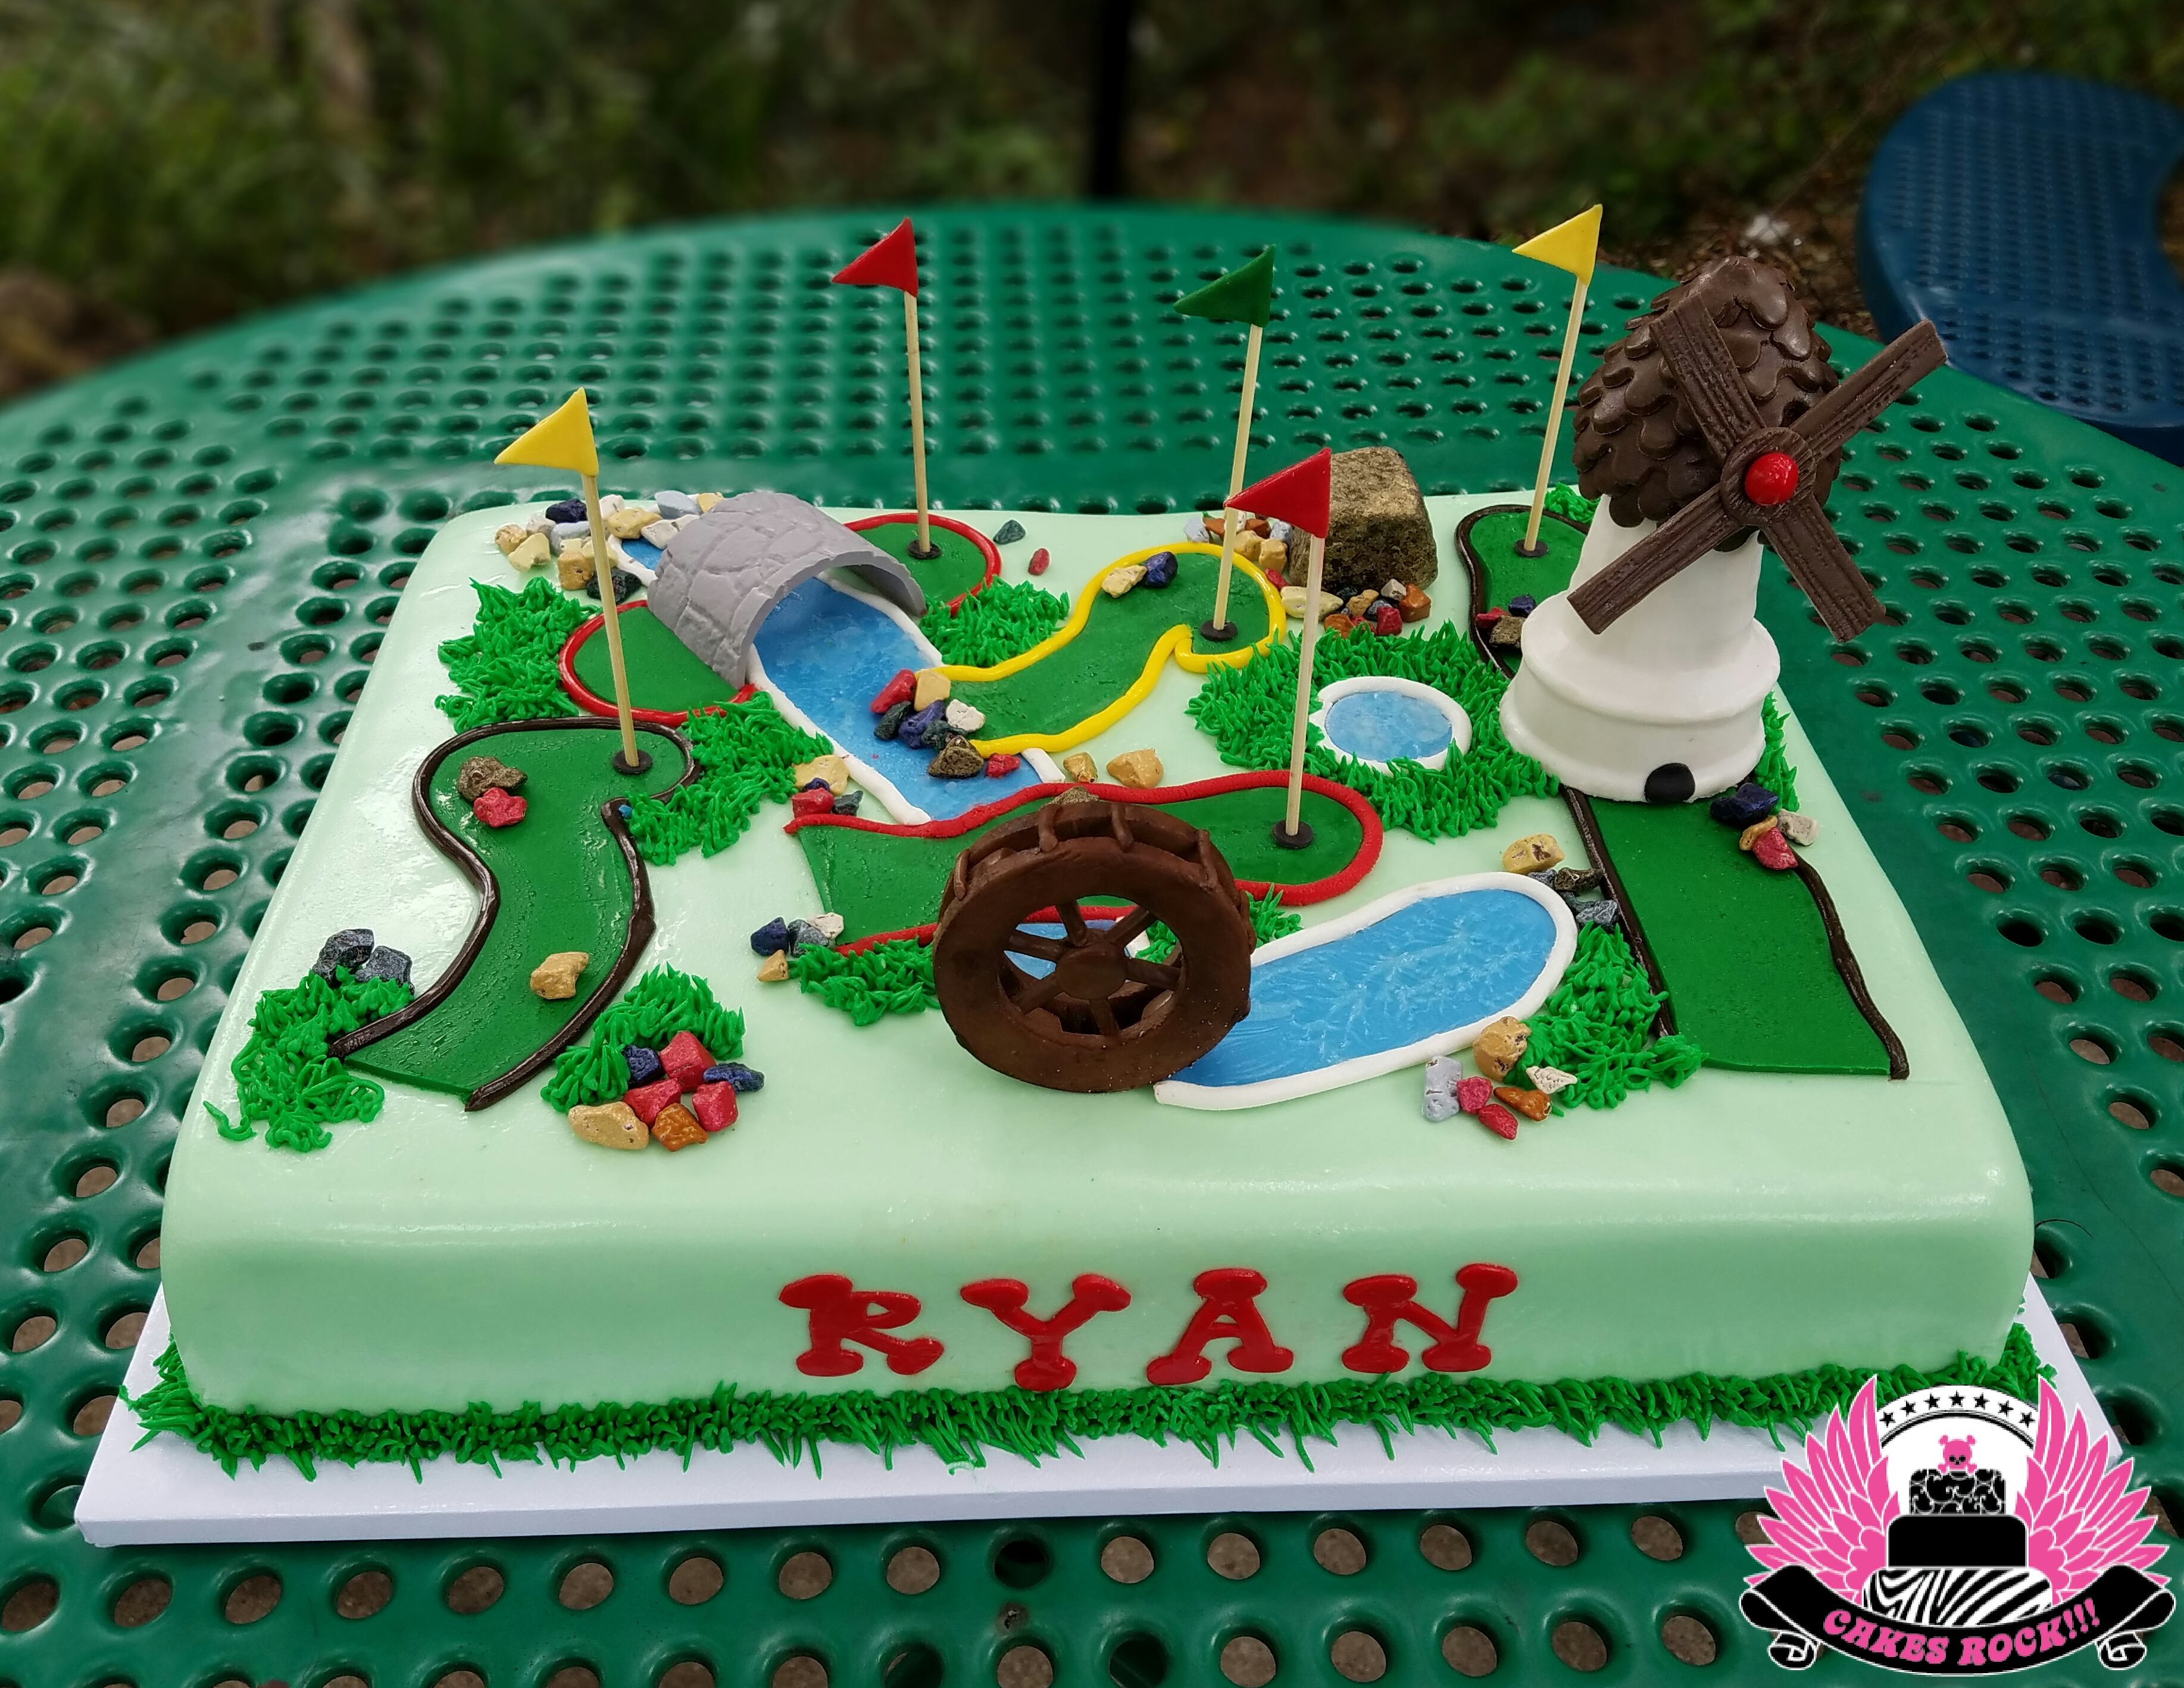 Ryans' mini golf cake